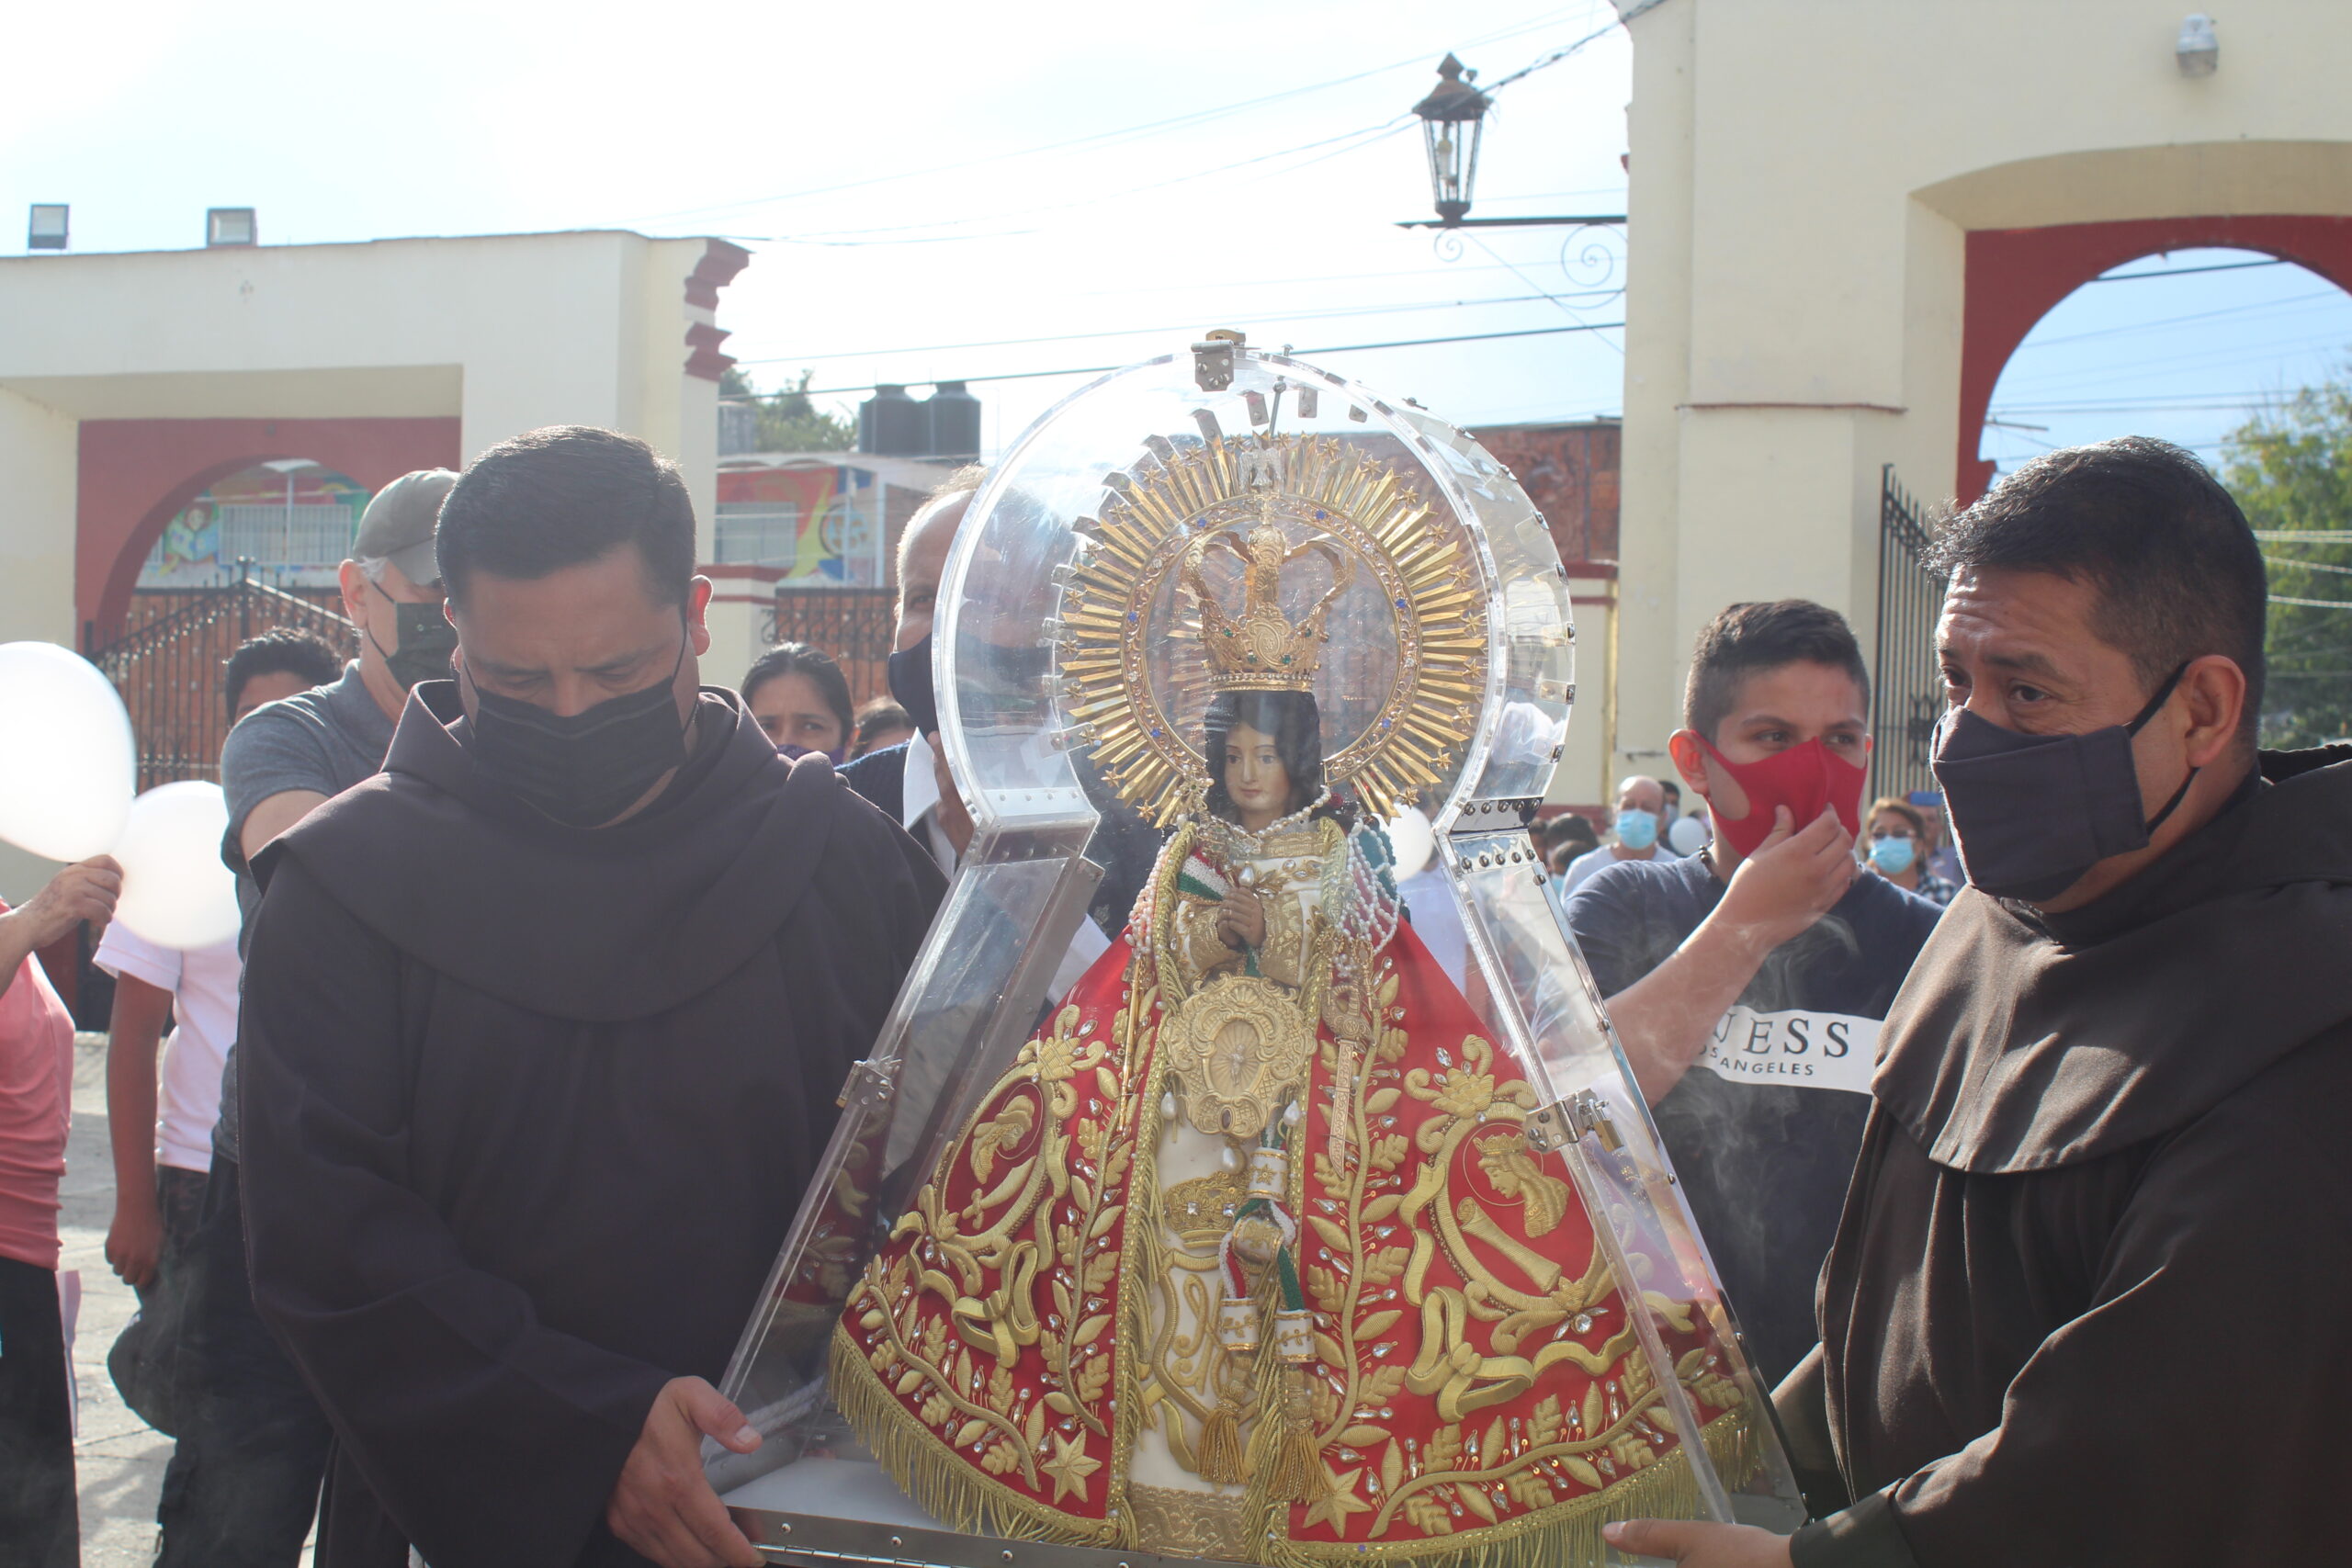 Virgin of Zapopan to arrive in San Antonio Tlayacapan